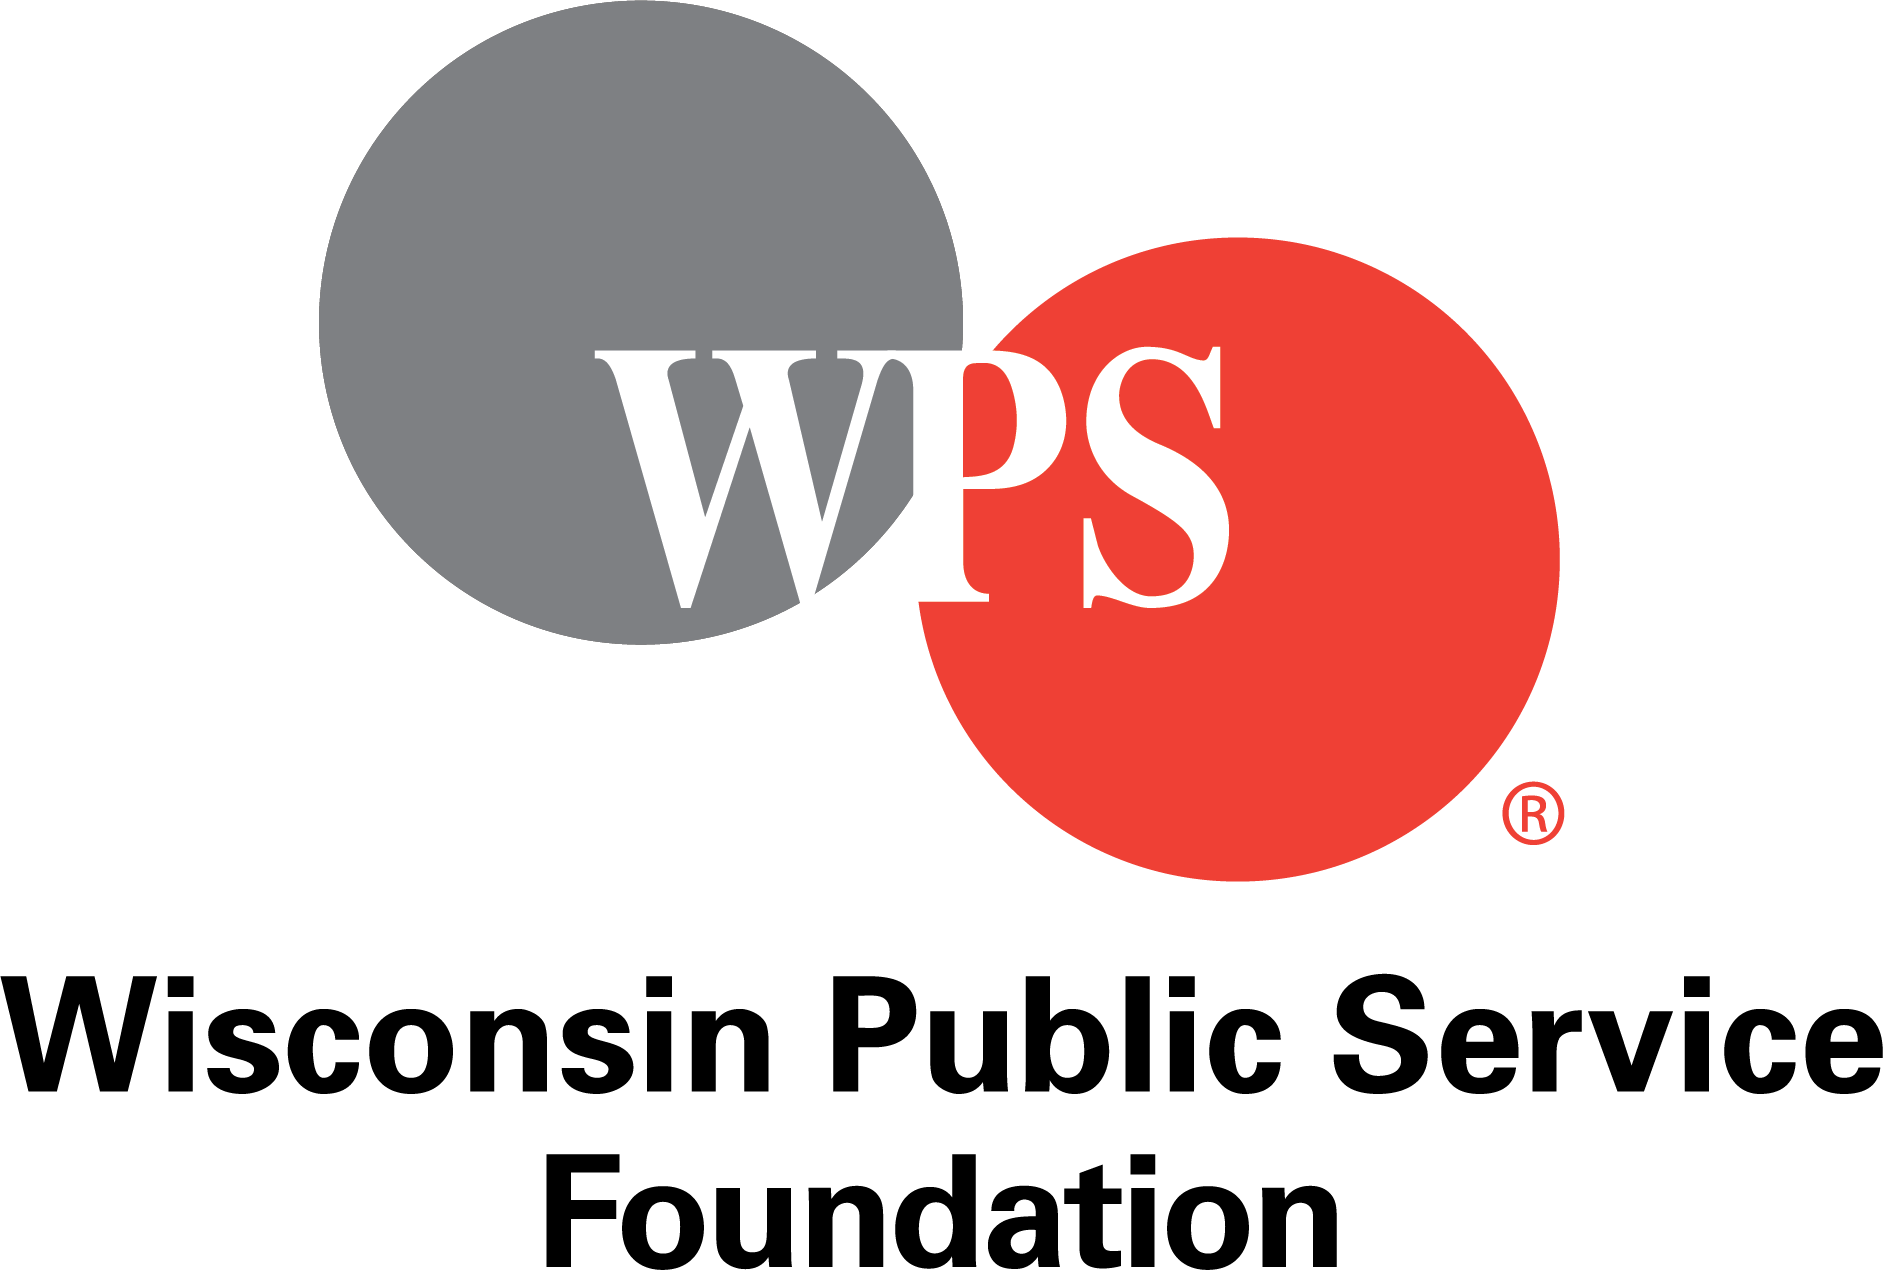 WPS Foundation logo.png